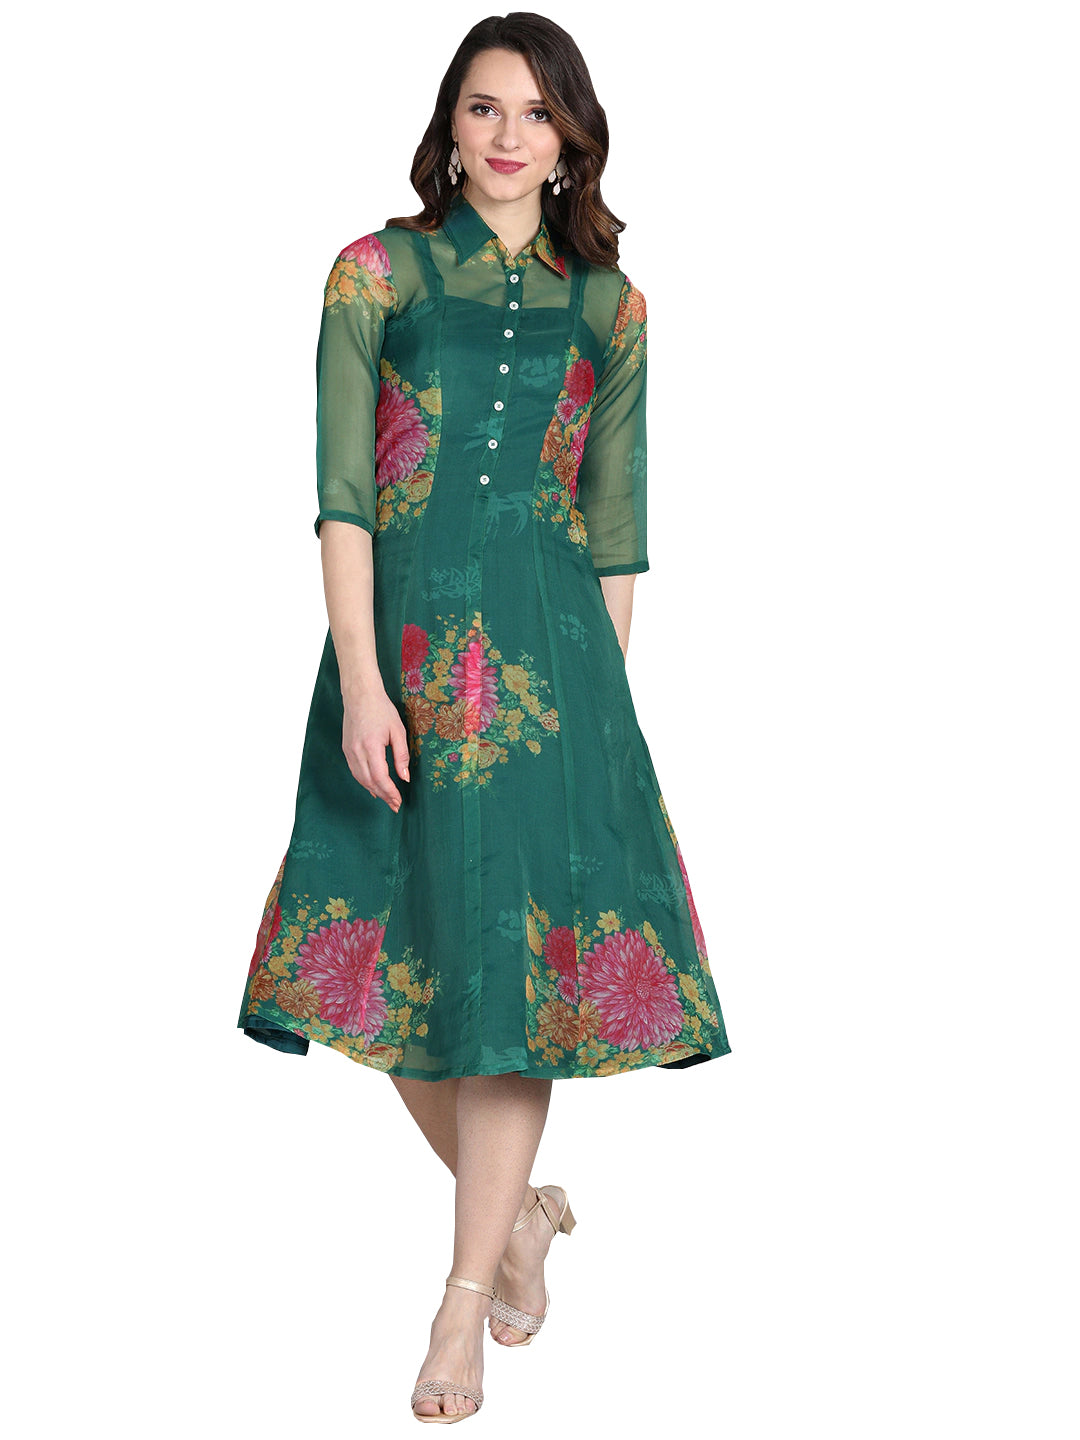 Custom-Made-Green-Coat-Styled-Dress